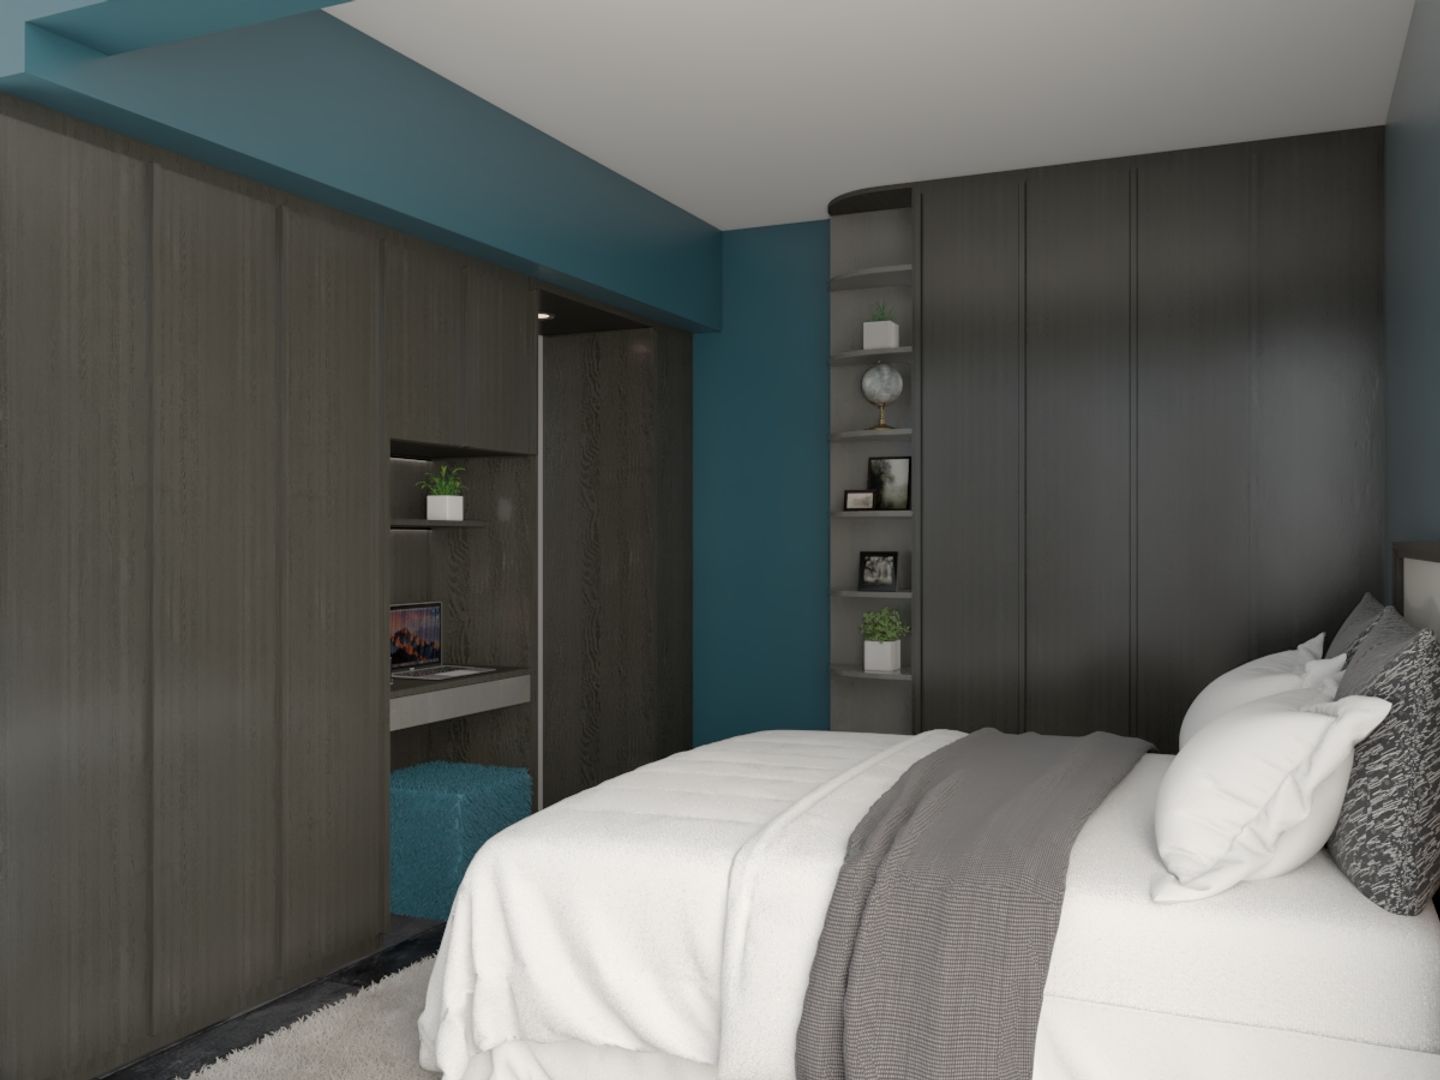 Compact Monochromatic Bedroom - Livspspace